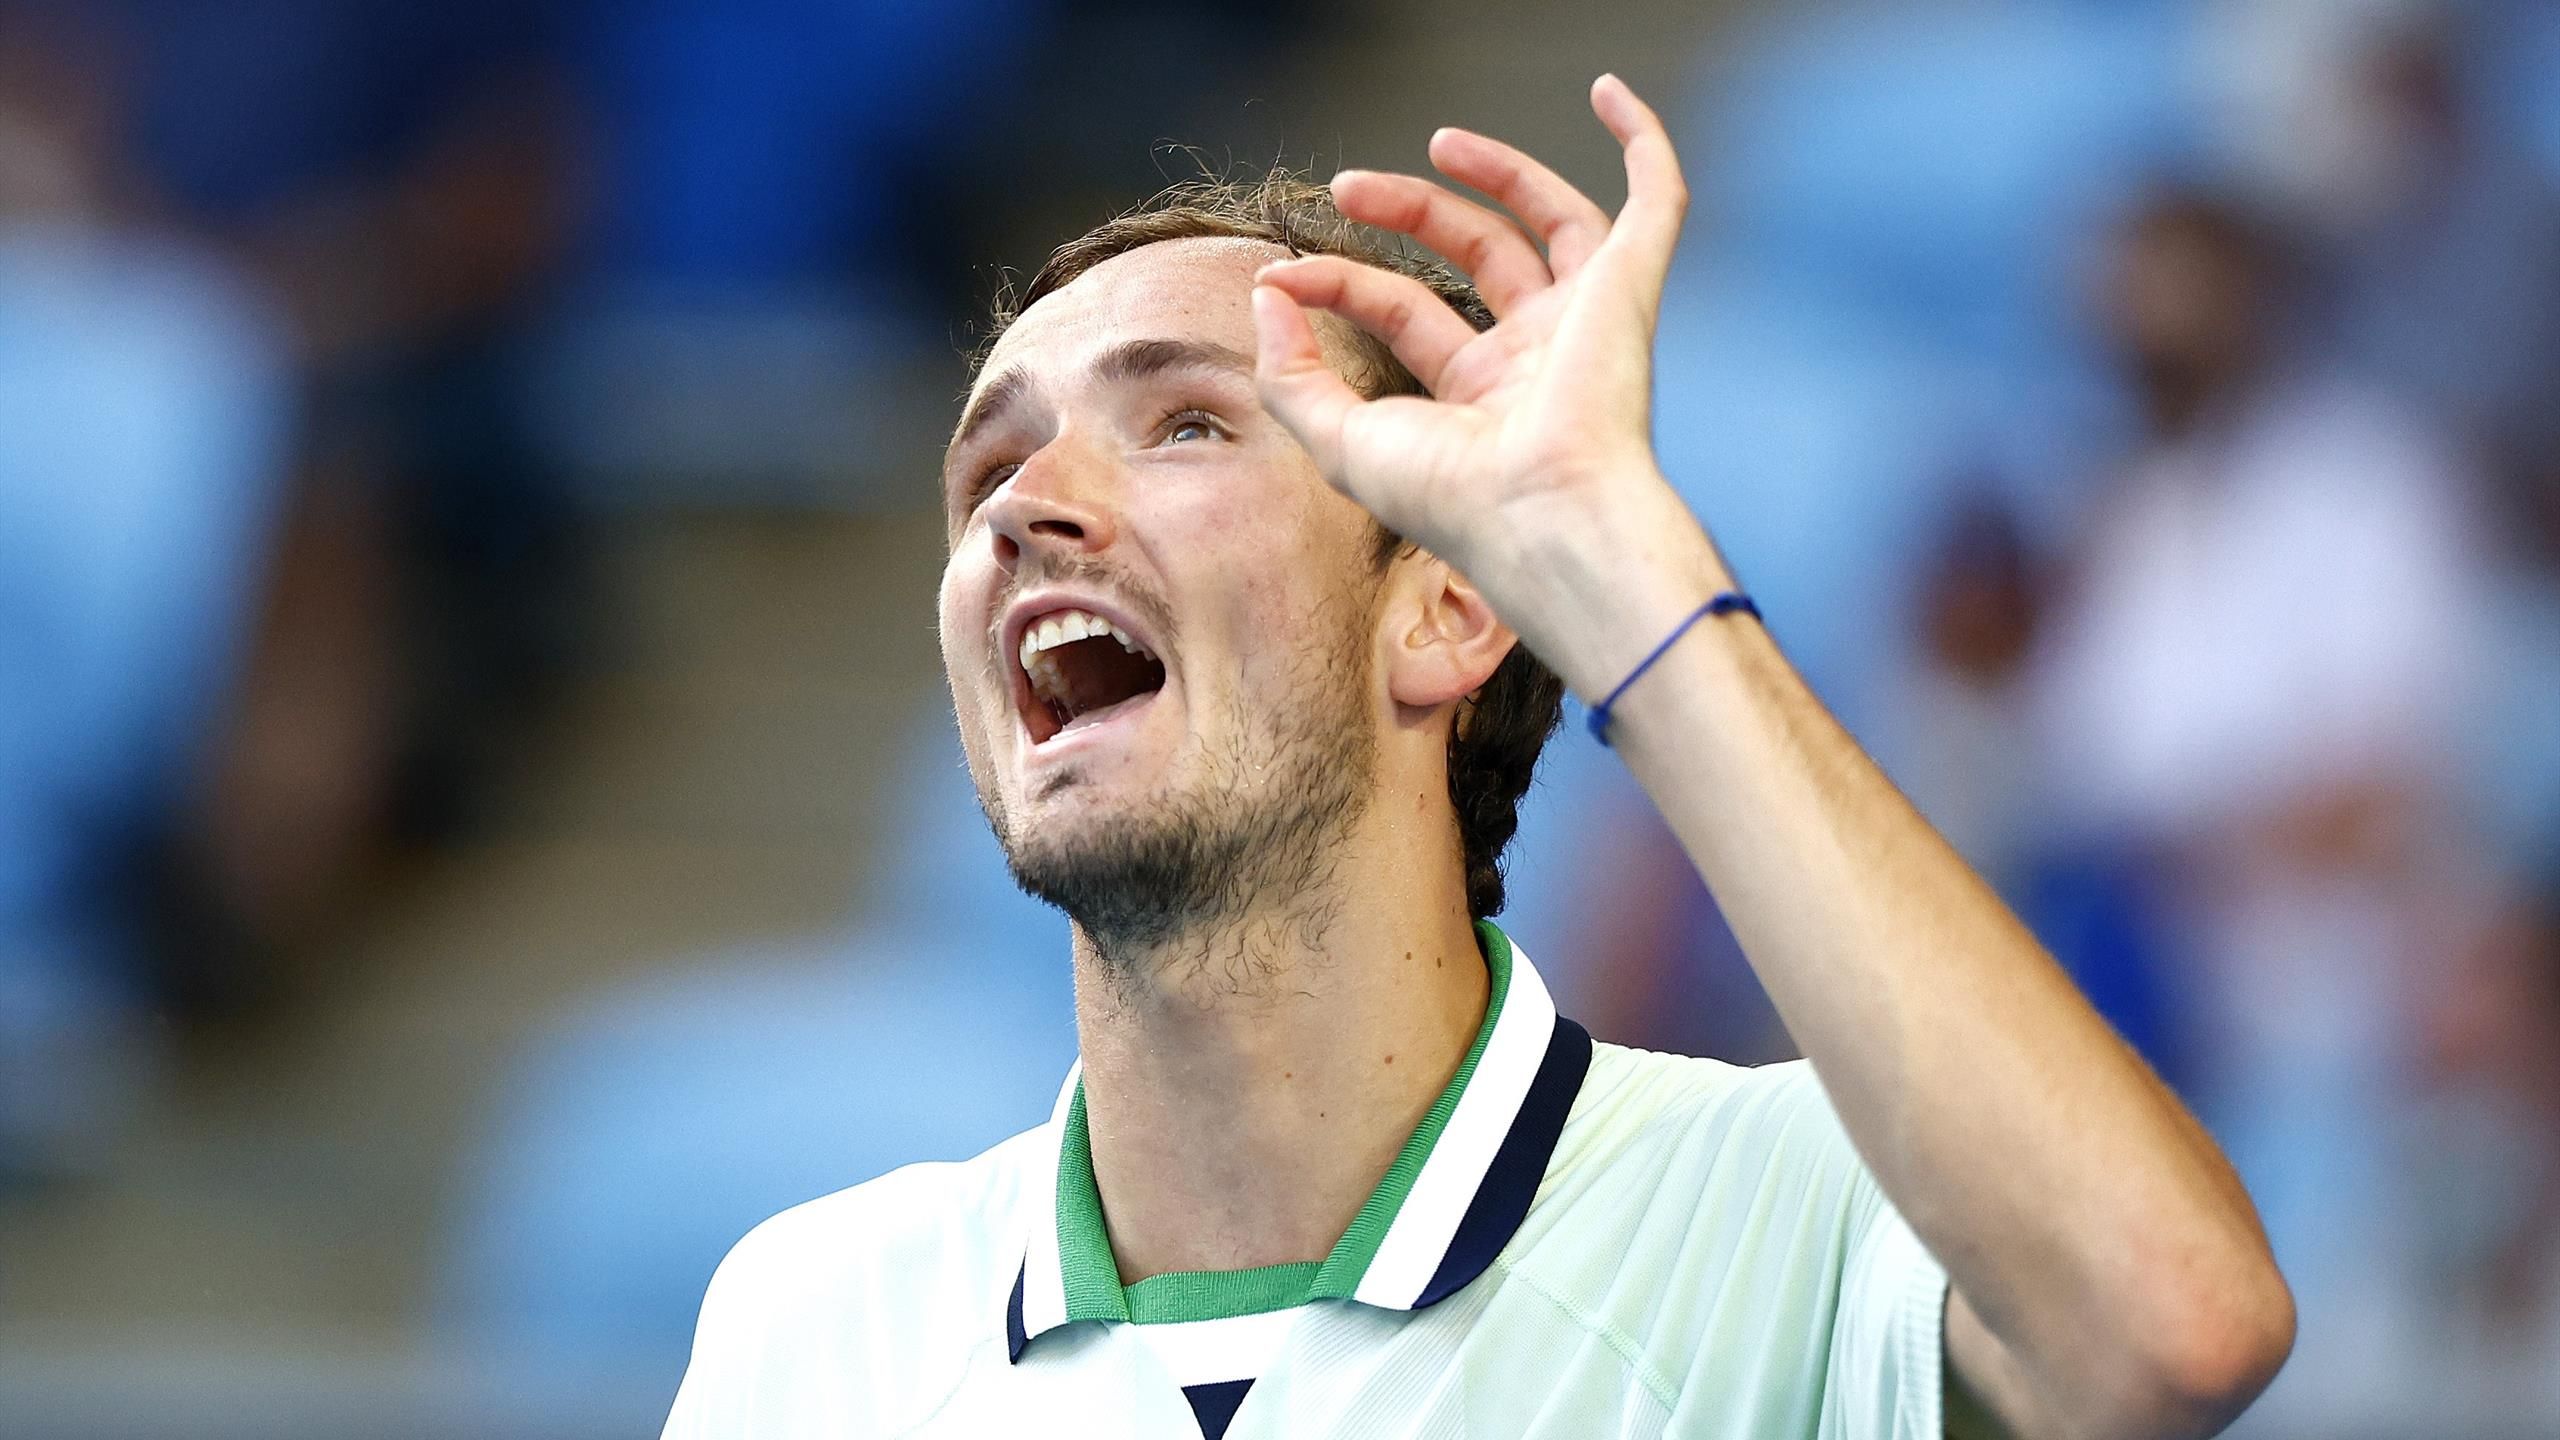 Daniil Medvedev overcomes Maxime Cressy in awkward encounter to reach Australian Open quarter-finals